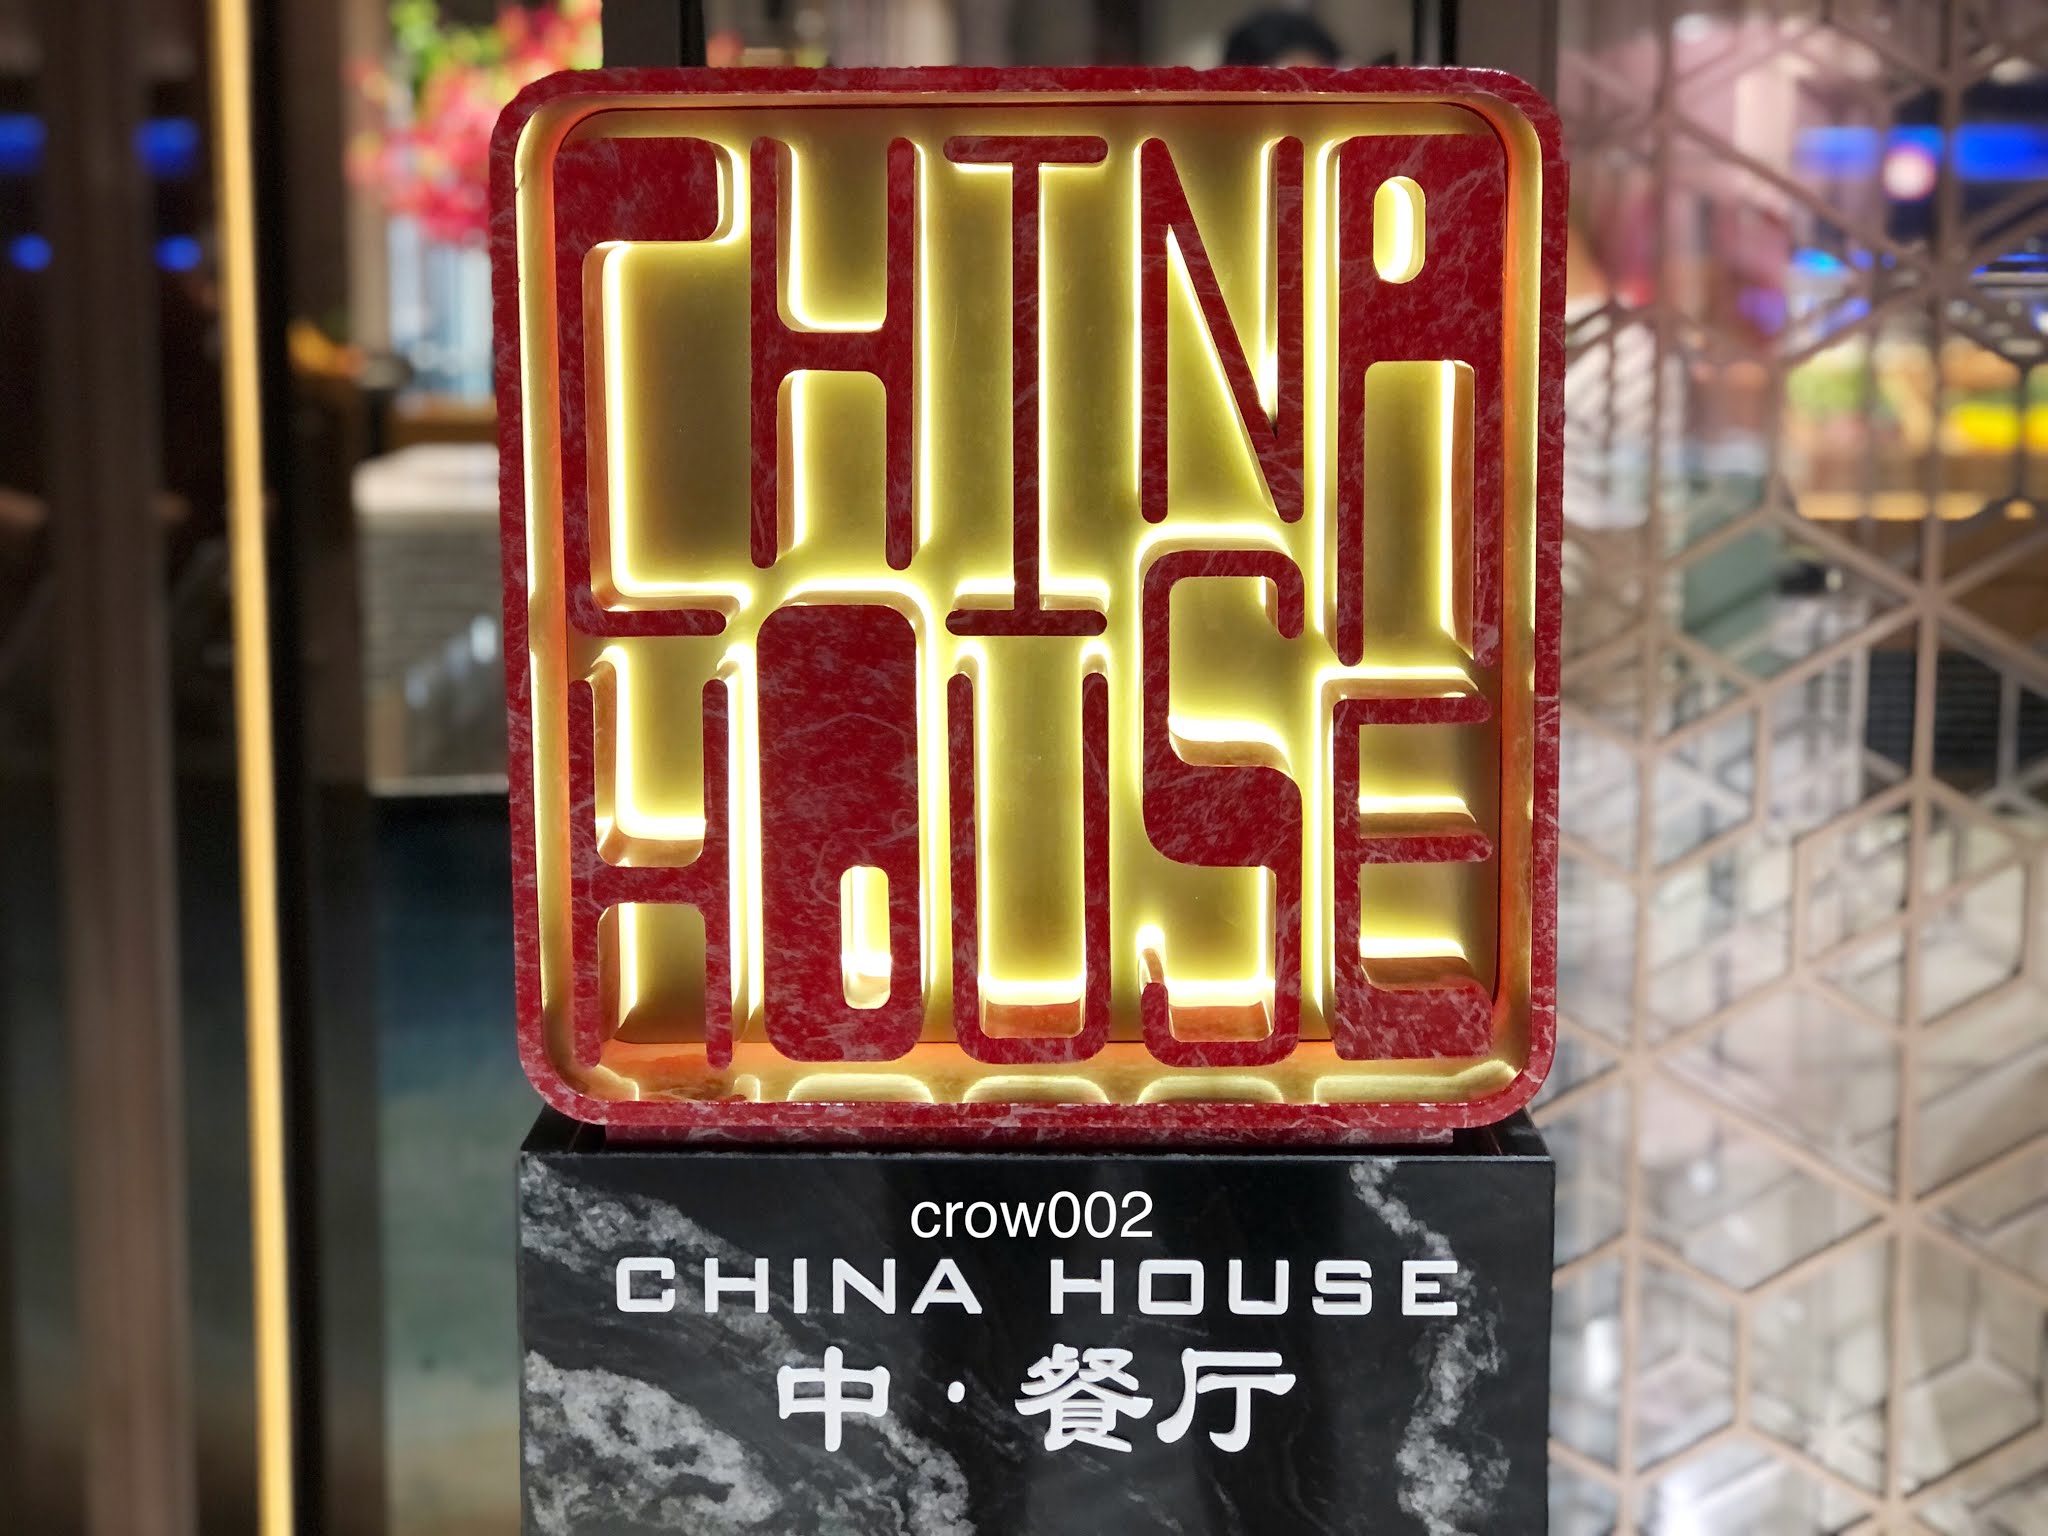 CHINA HOUSE at GRAND HYATT JEJU DREAM TOWER  - 그랜드 하얏트 제주 드림 타워 차이나 하우스 런치 딤섬 메뉴 2021년 6월 두 번째